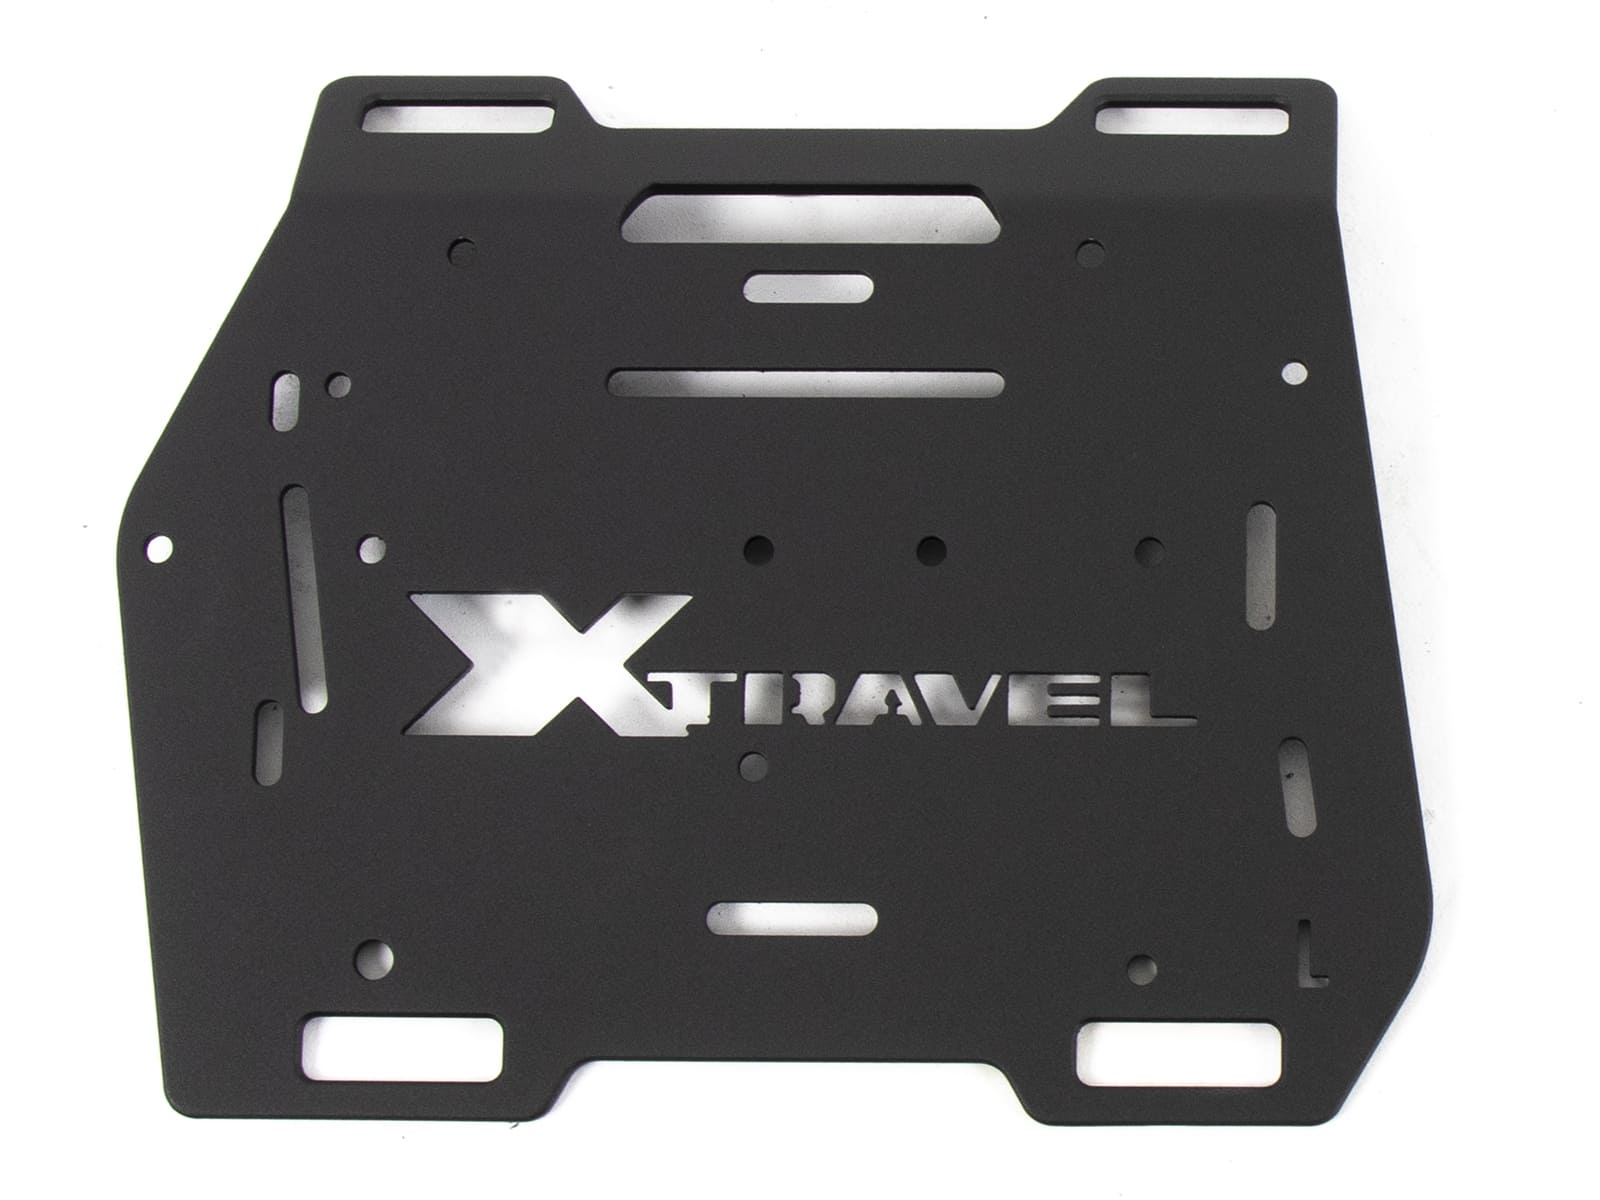 Xtravel Basic spare holding plate left side